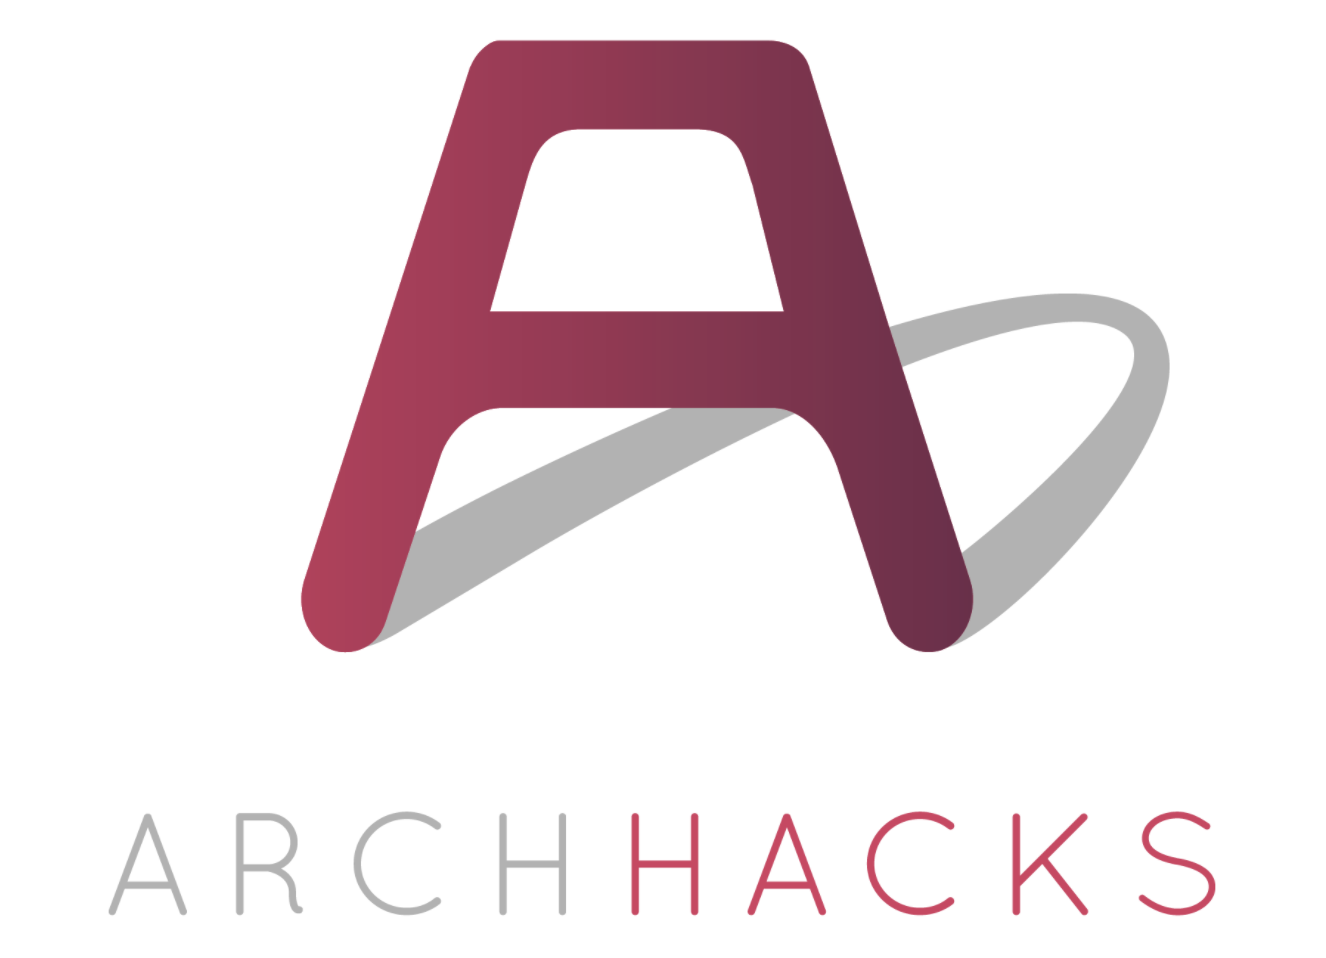 archhacks logo